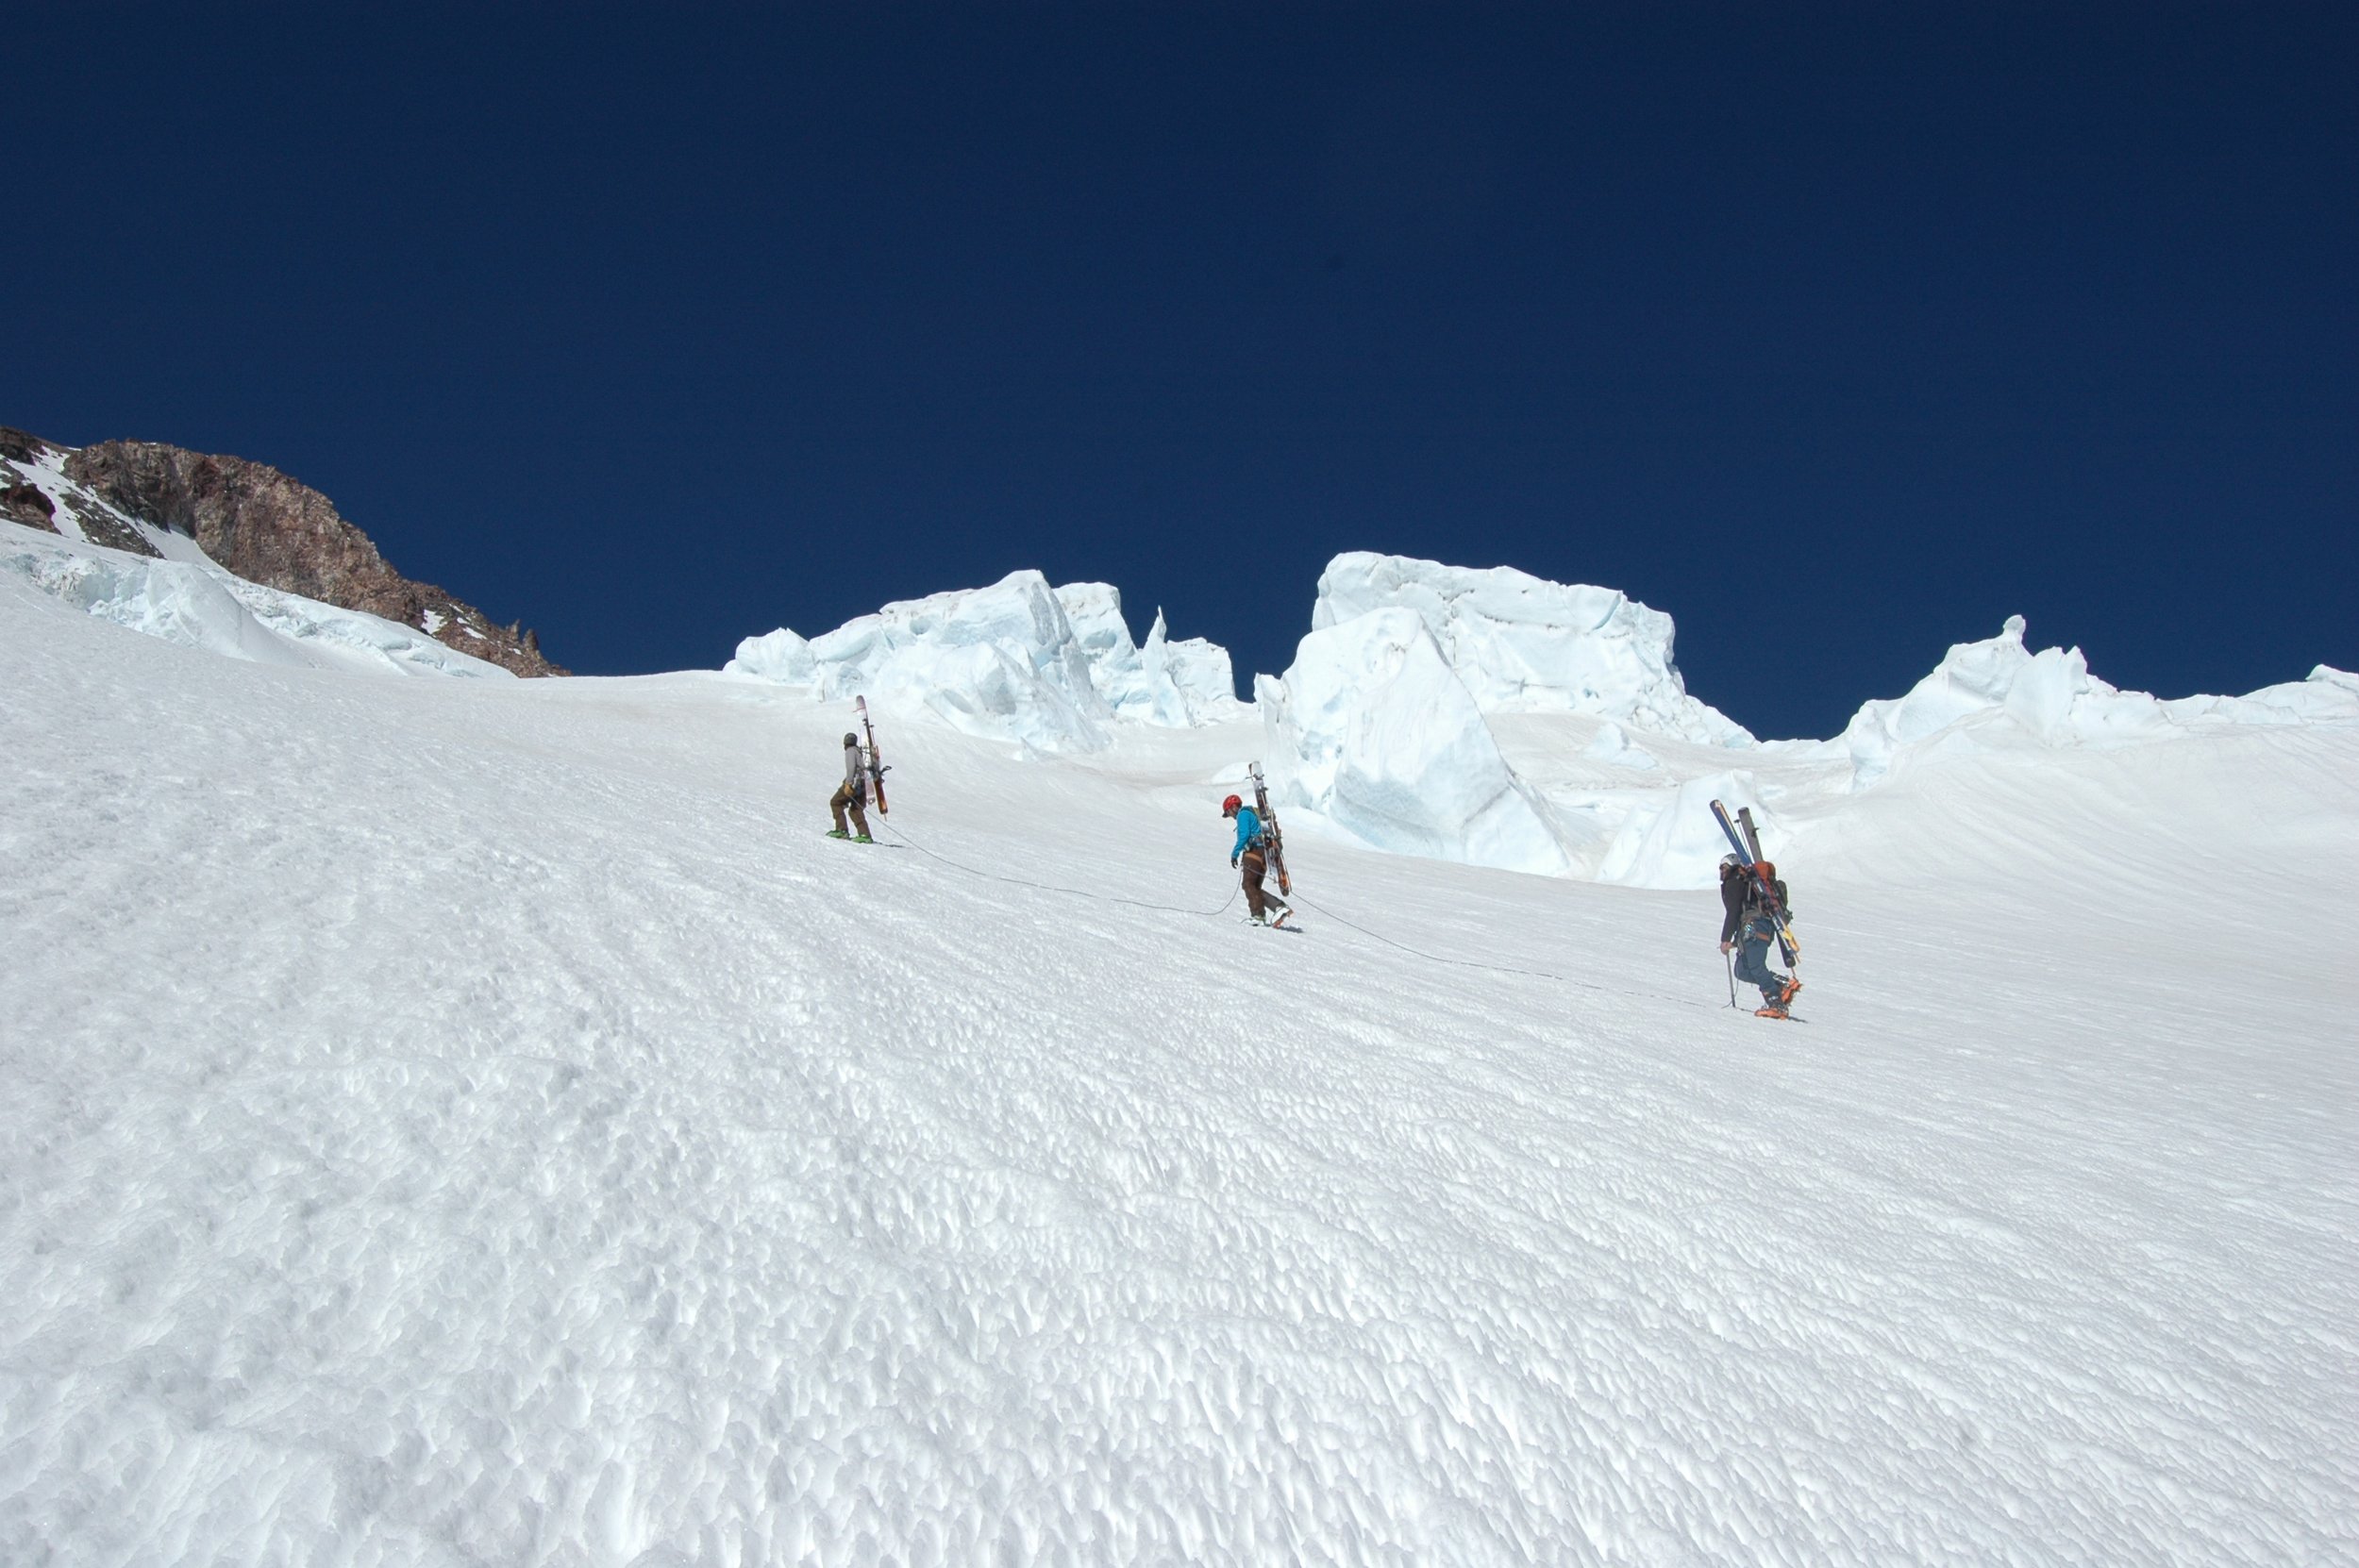 Group of ski mountaineers climb toward the summit.